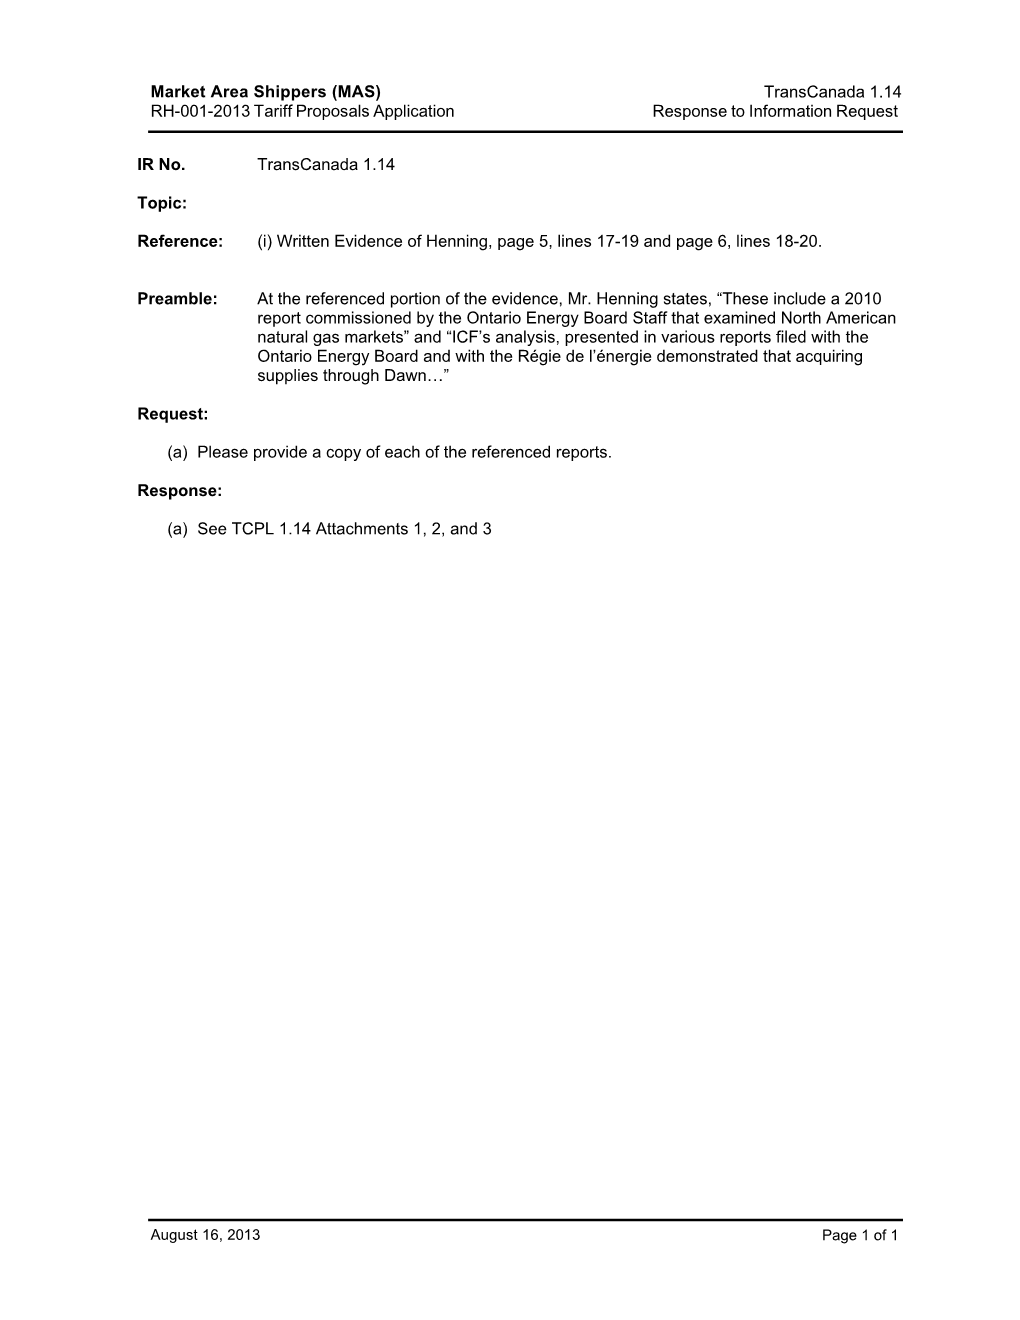 (MAS) RH-001-2013 Tariff Proposals Application Transcanada 1.14